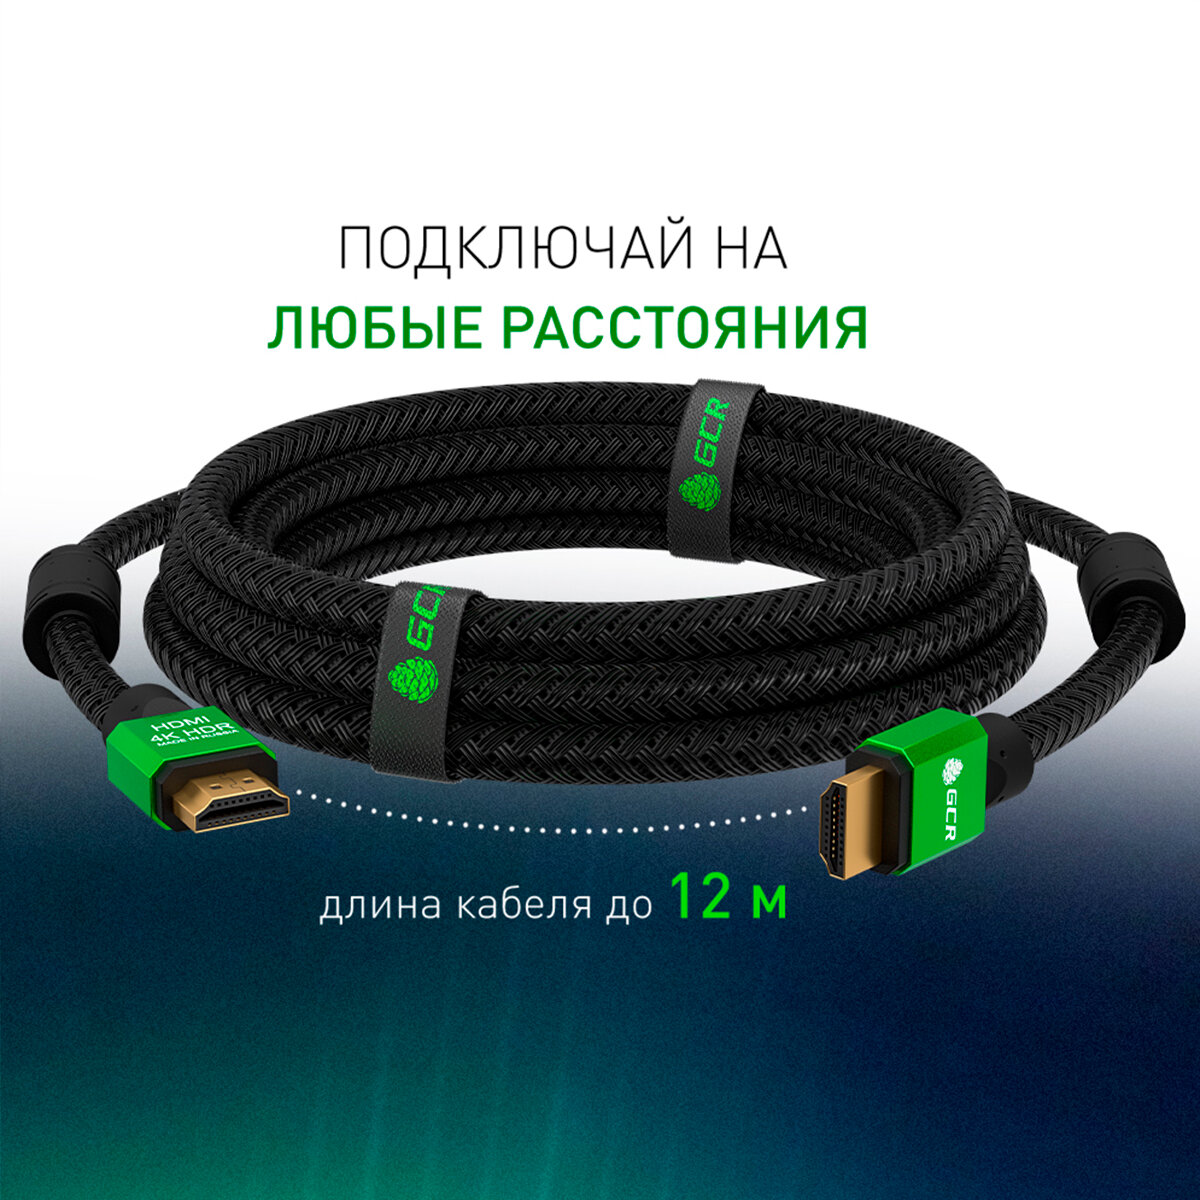 GCR Кабель 7.5m HDMI версия 2.0, HDR 4:2:2, Ultra HD, 4K 60 fps 60Hz/5K*30Hz, 3D, AUDIO, 18.0 Гбит/с, 28/28 AWG, OD7.8mm, тройной экран, черный нейлон, AL корпус черный, фер.кольца, GCR-52193 Greencon Greenconnect - фото №7